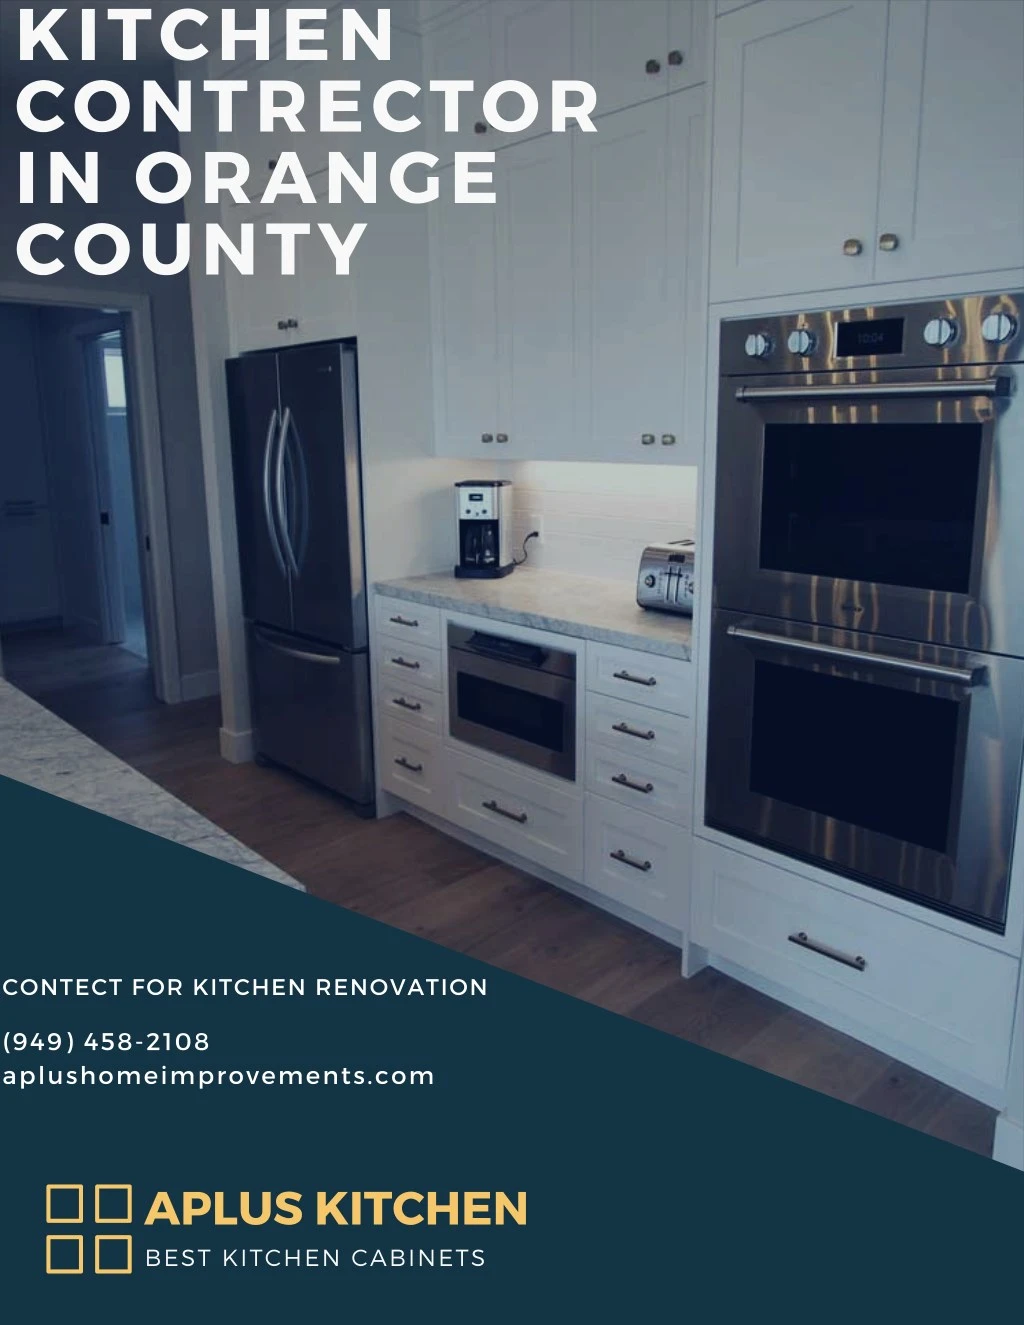 kitchen contrector in orange county